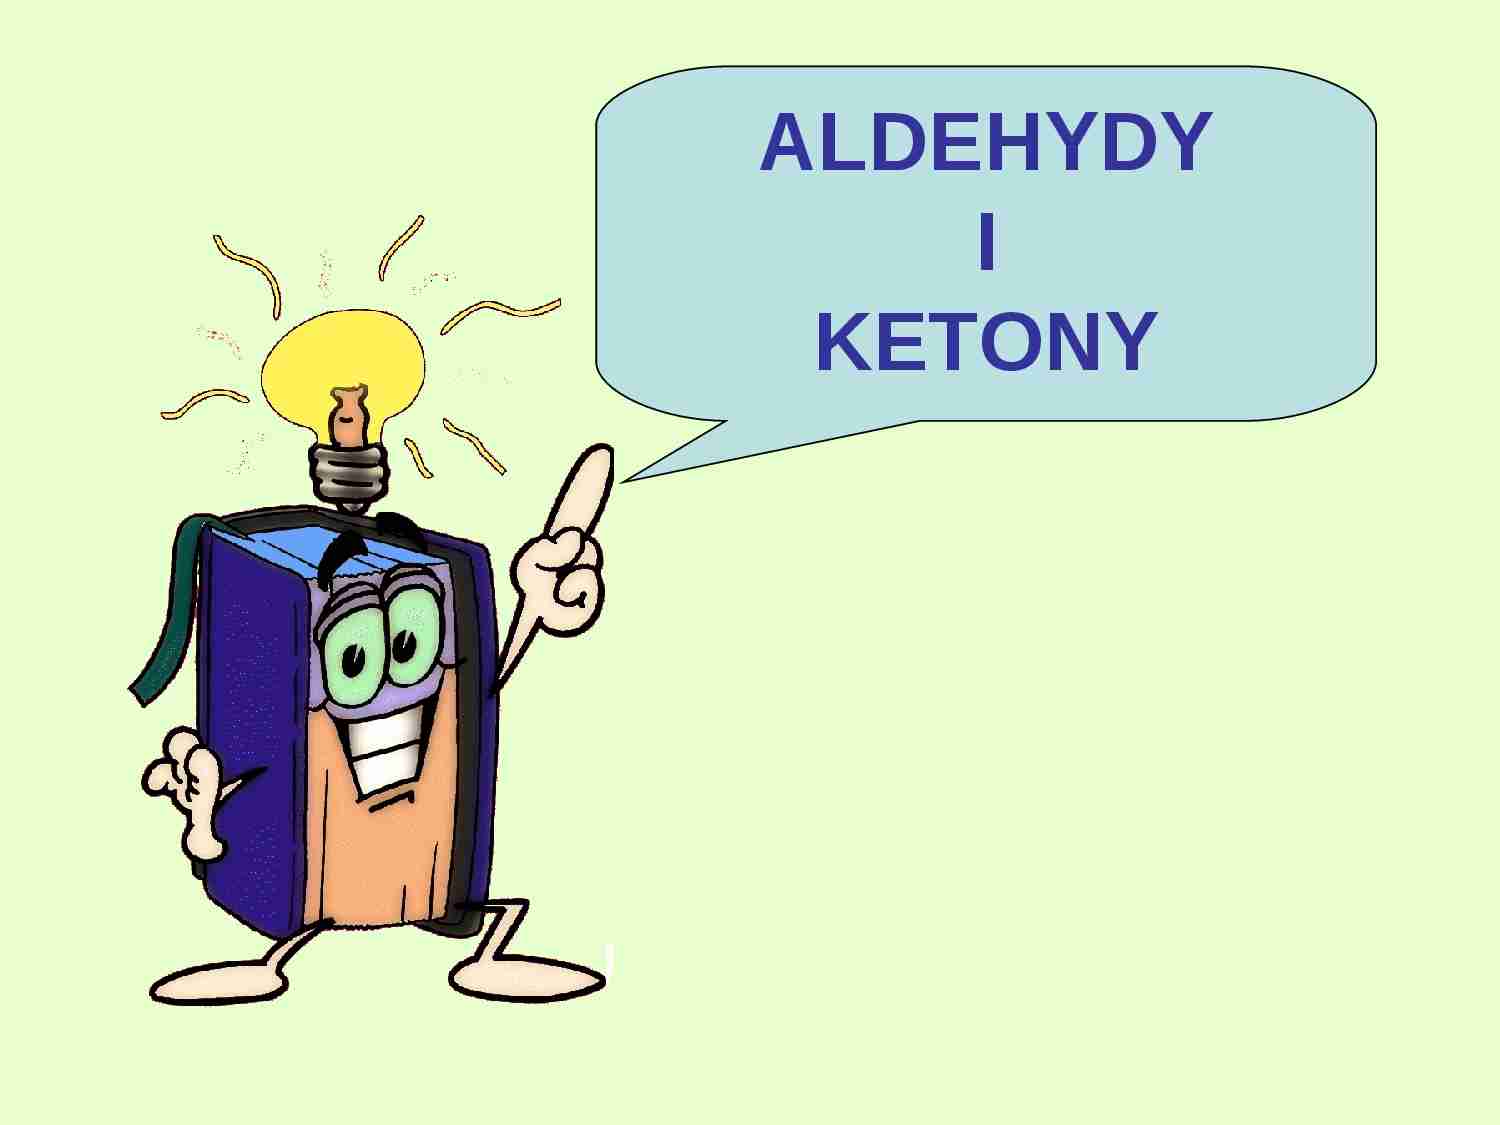 Aldehydy i ketony - zagadnienia - strona 1